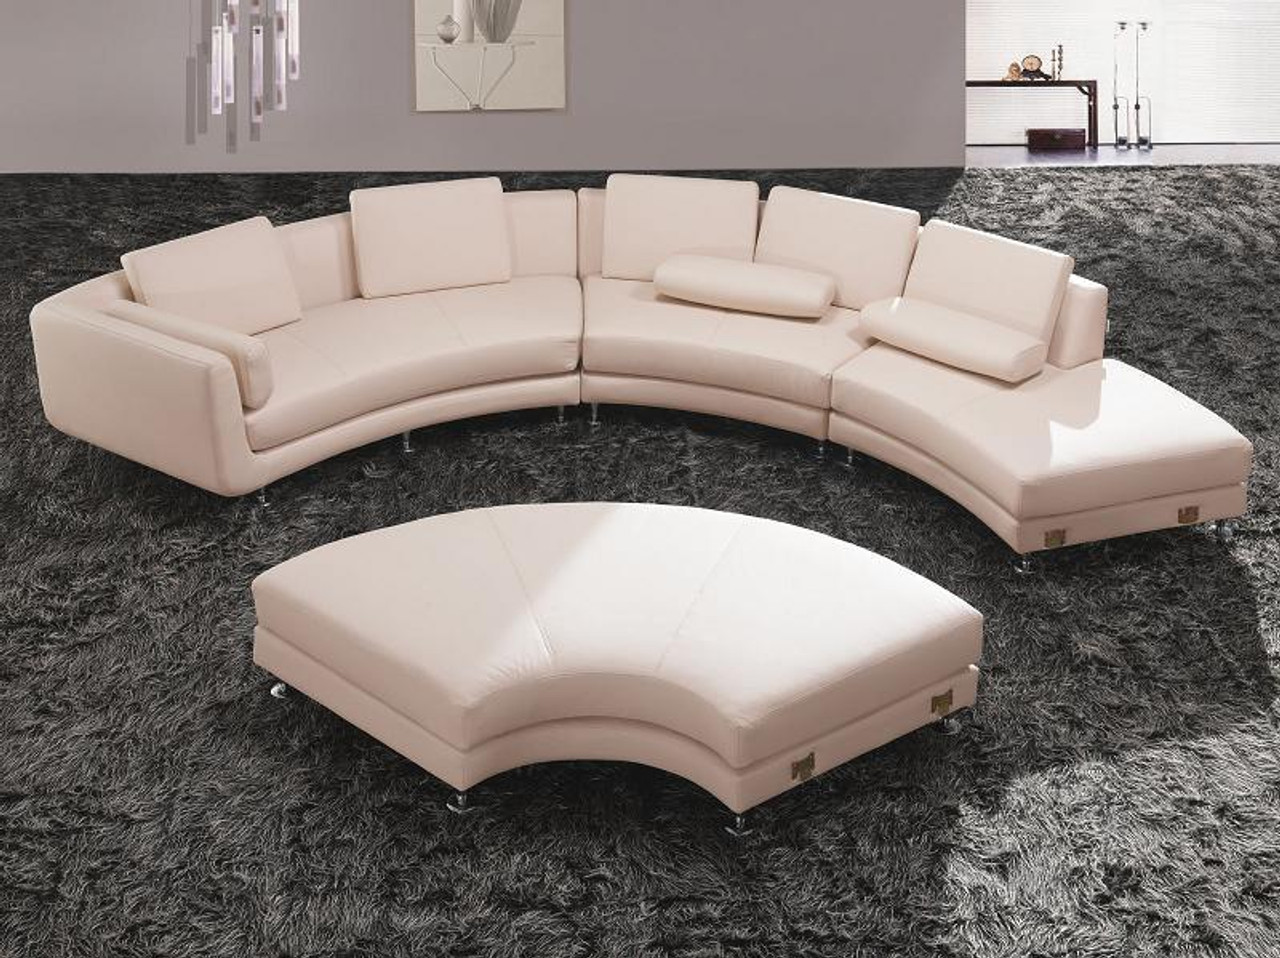 VIG Furniture VGYIA94-ECO Divani Casa A94 - Contemporary Bonded Leather Sectional Sofa & Ottoman